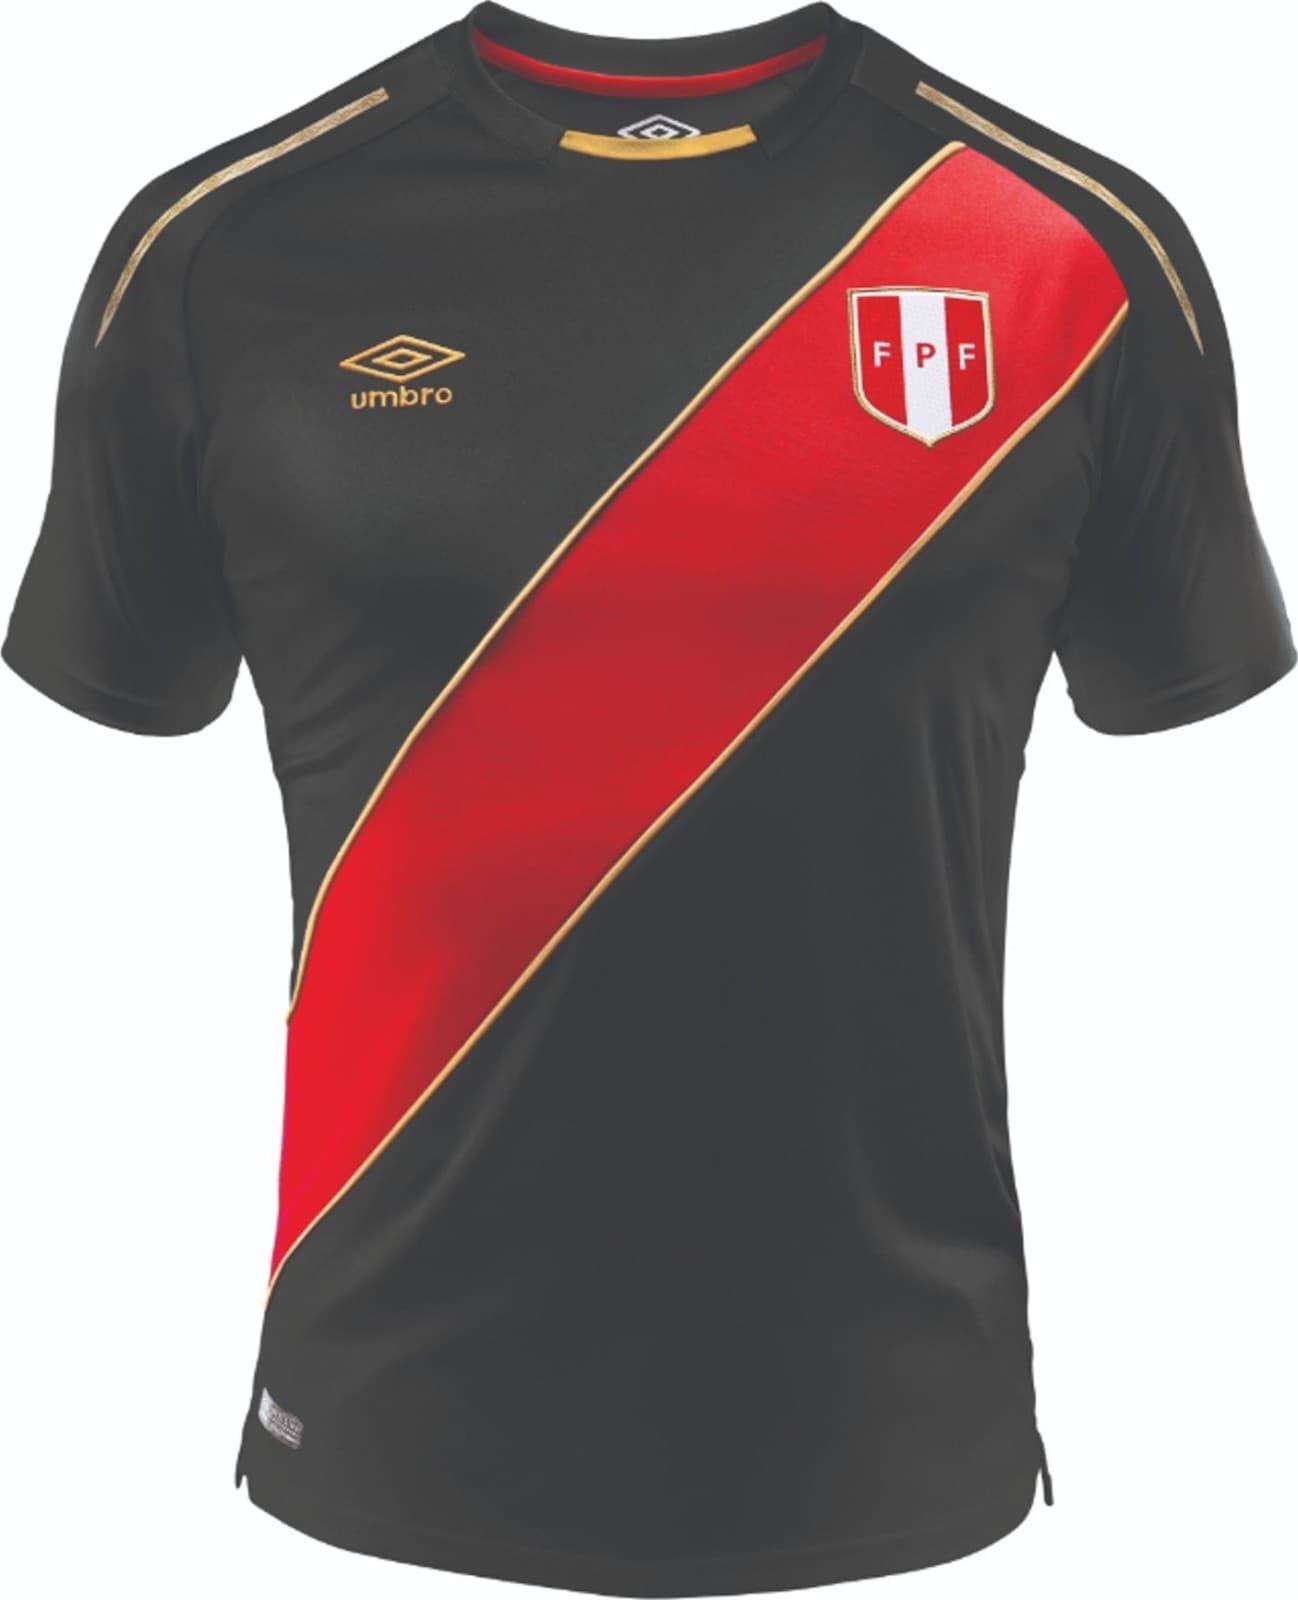 Peru Umbro Logo - Peru 2018-19 Third Shirt Released | The Kitman